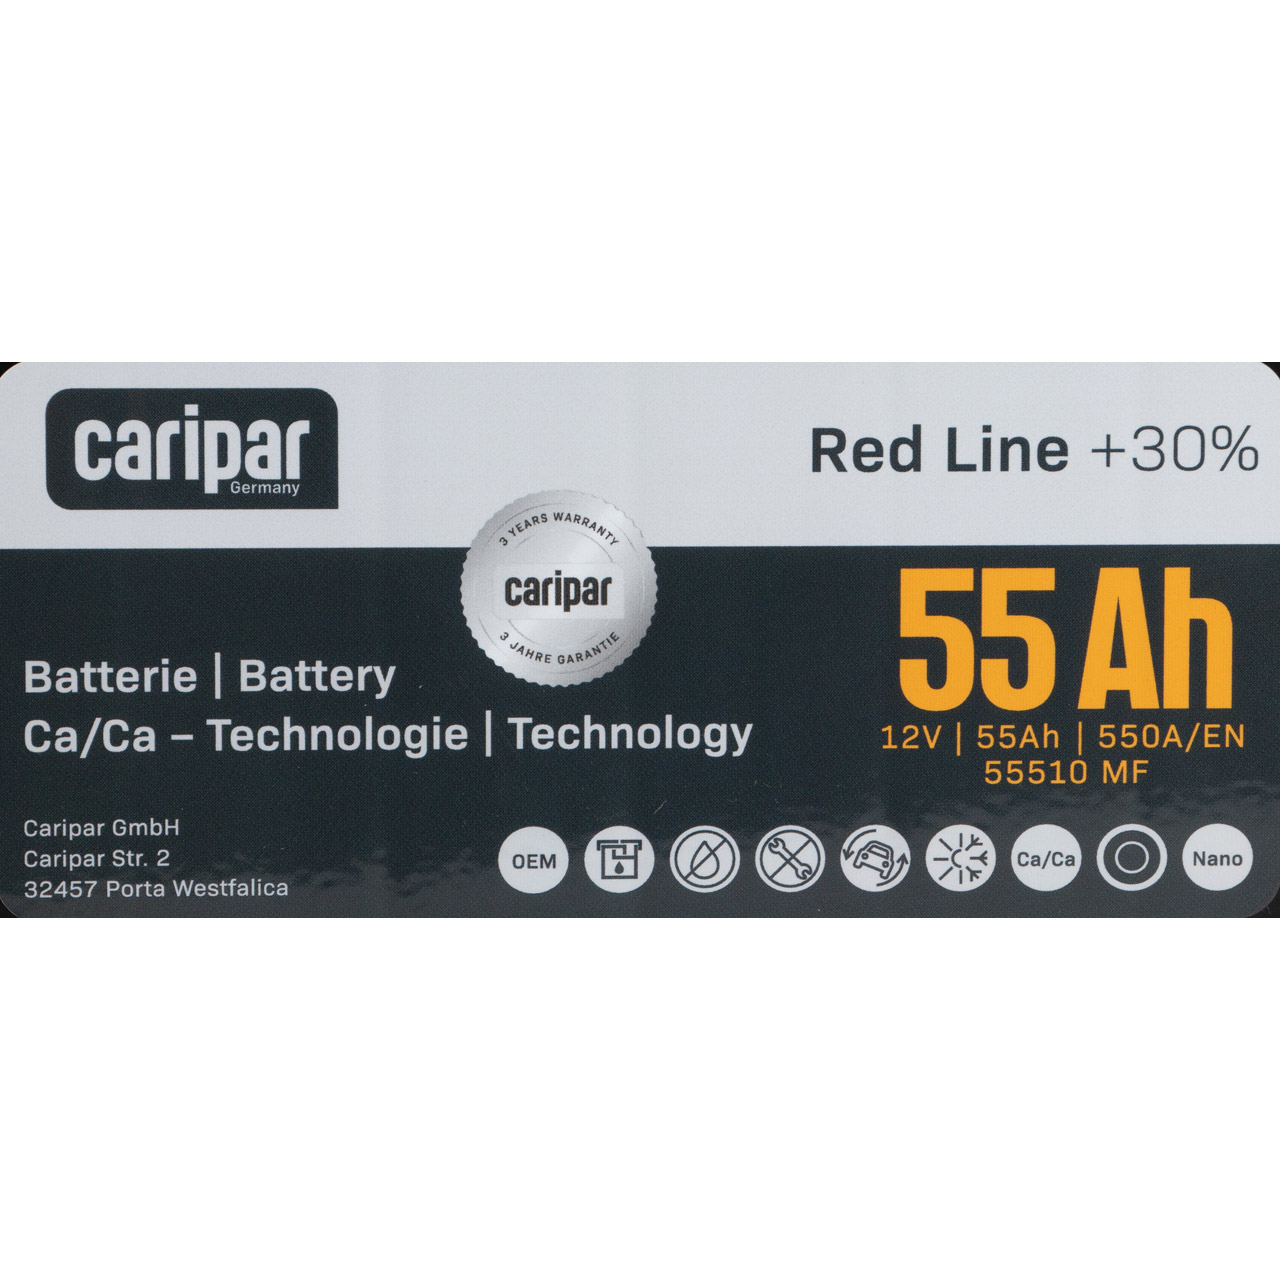 CARIPAR RED LINE +30% PKW KFZ Autobatterie Starterbatterie 12V 55Ah 550A/EN B13